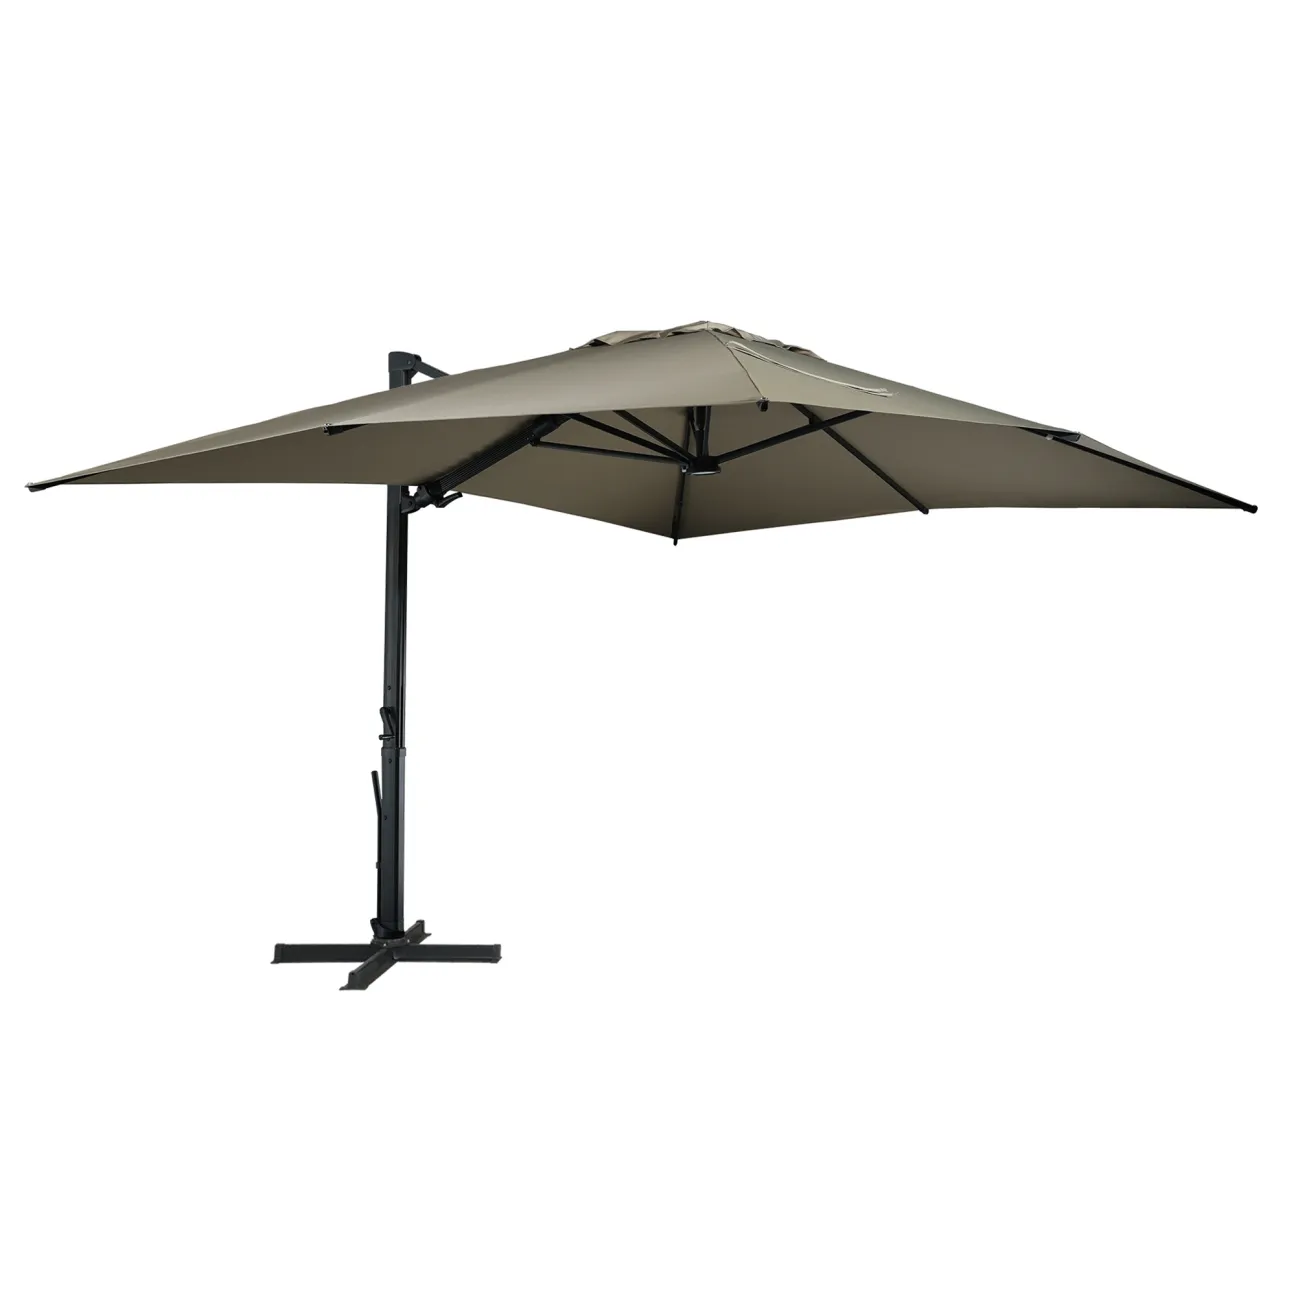 MONDAWE 13ft Square Solar LED Cantilever Patio Umbrella for Outdoor Shade